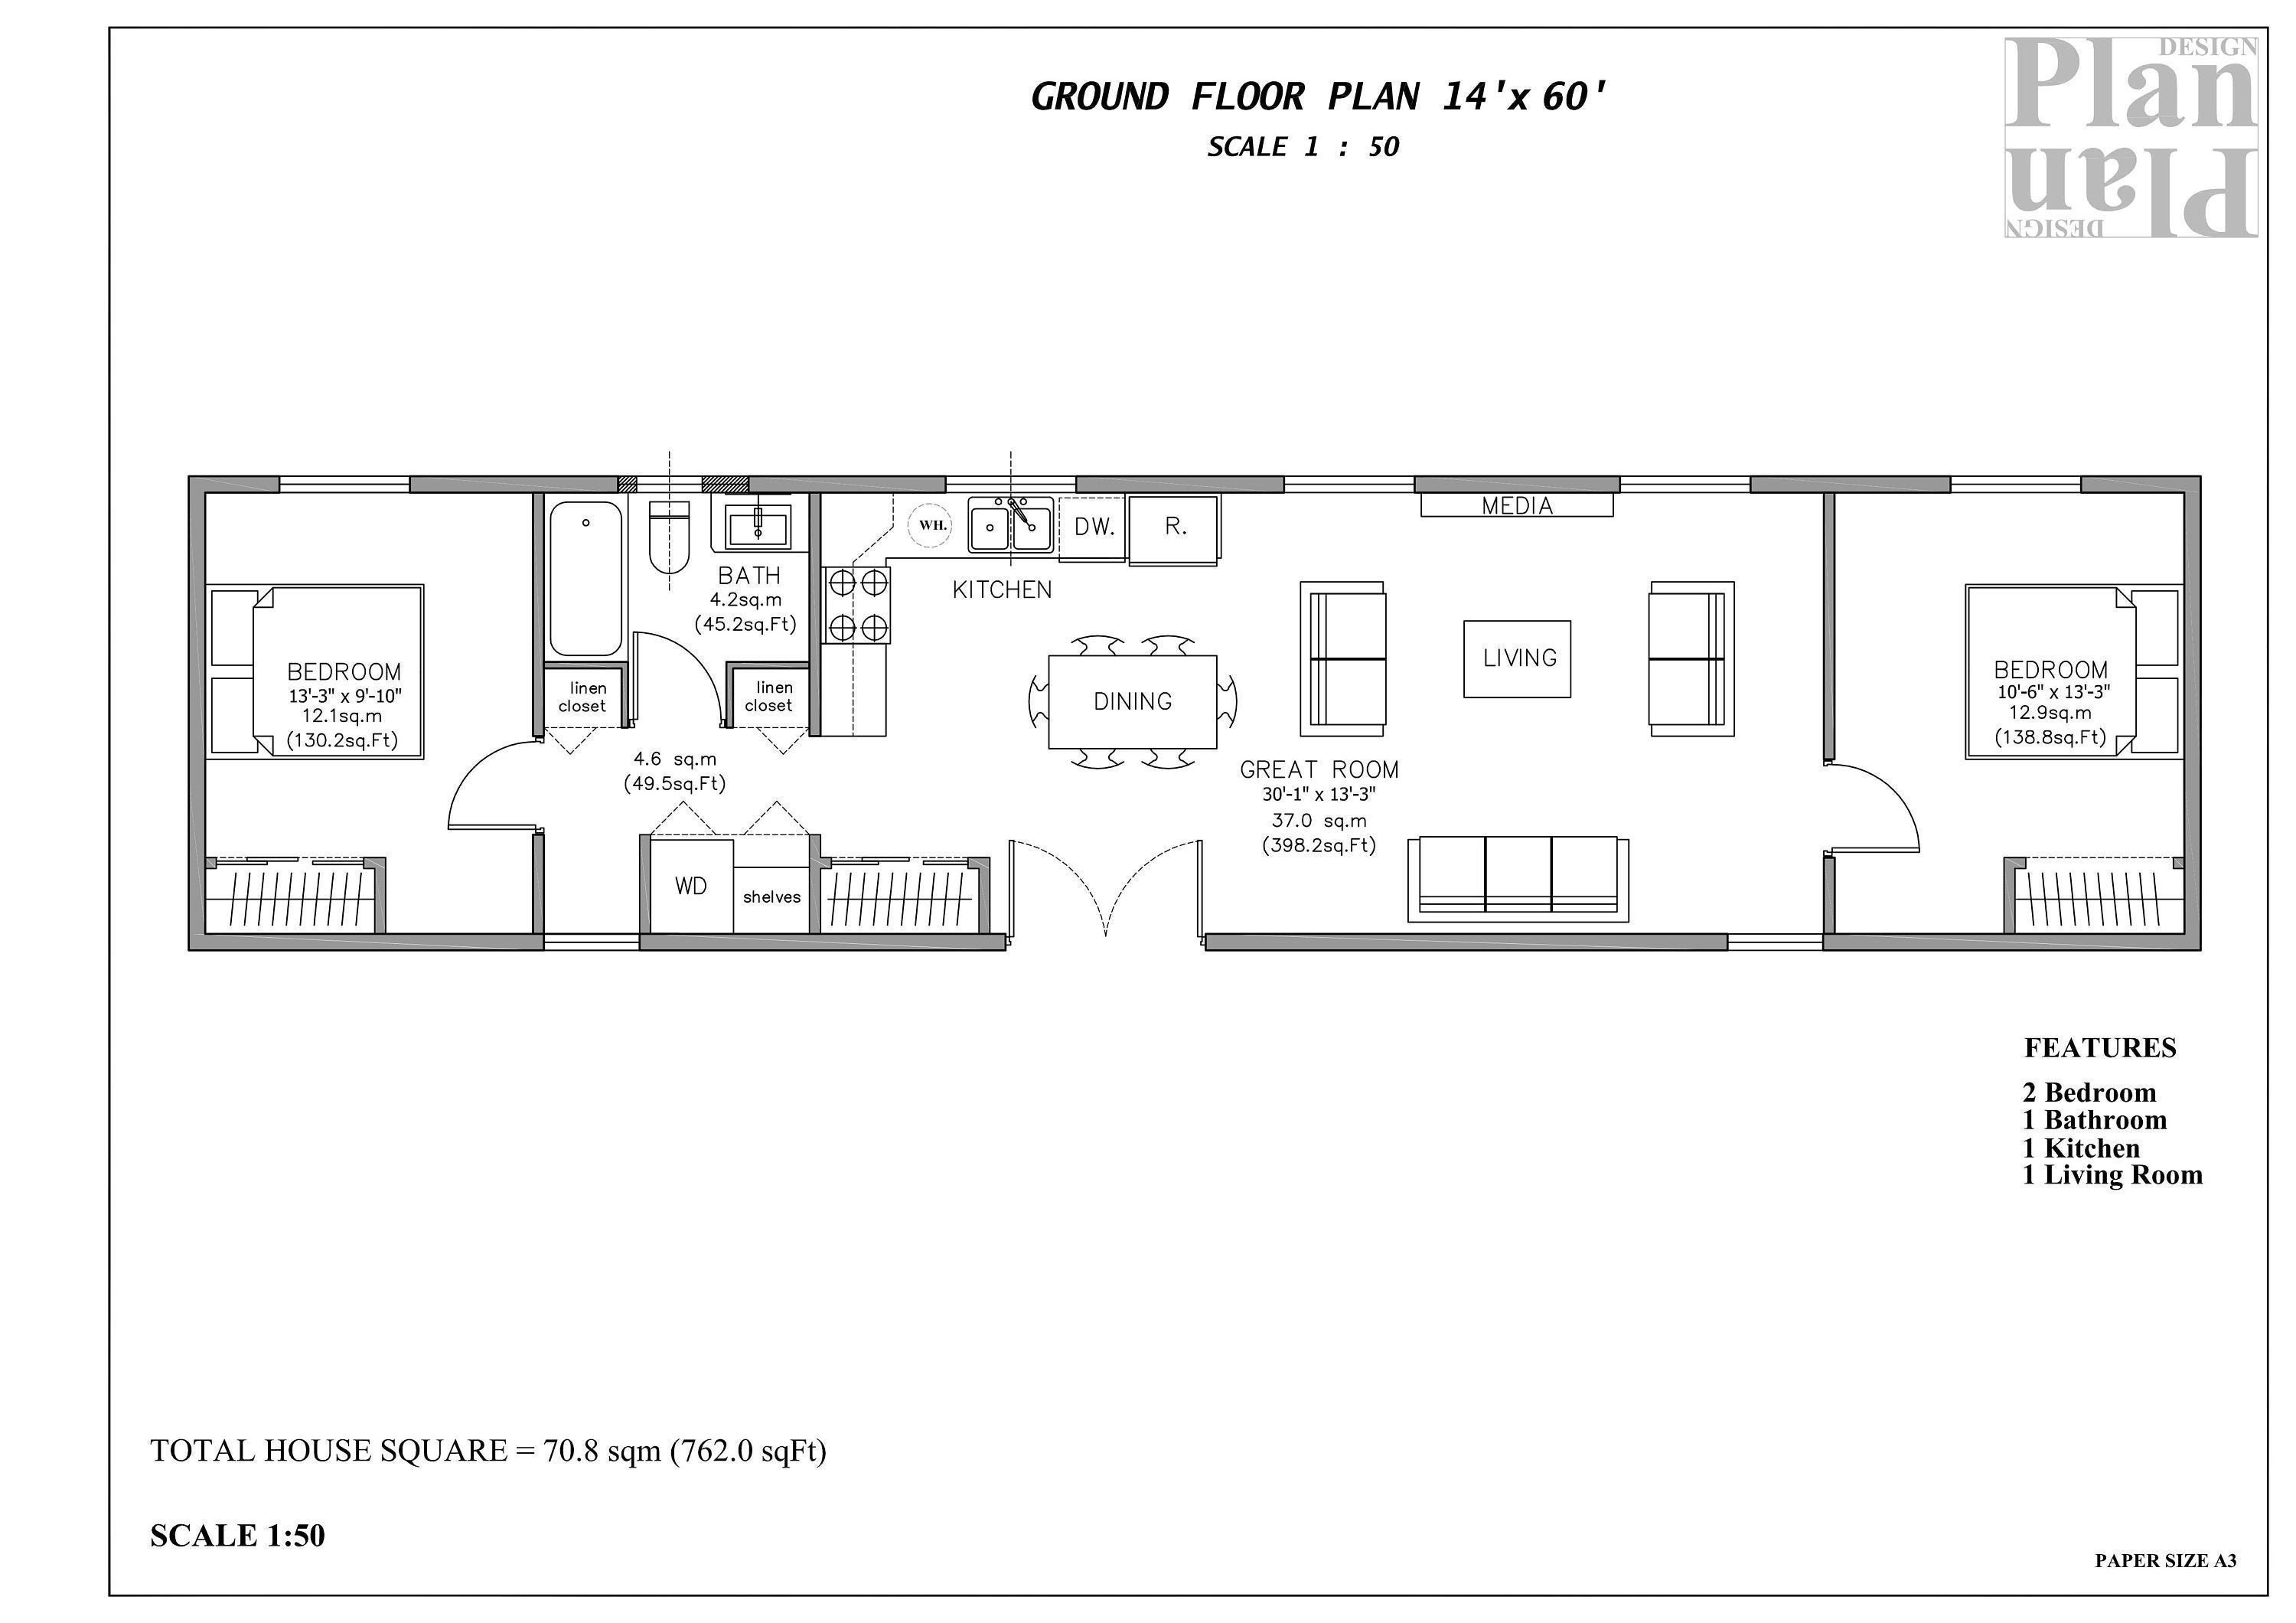 14x60 Mobile Home floor plan 2BR/1BA plan for the mobile